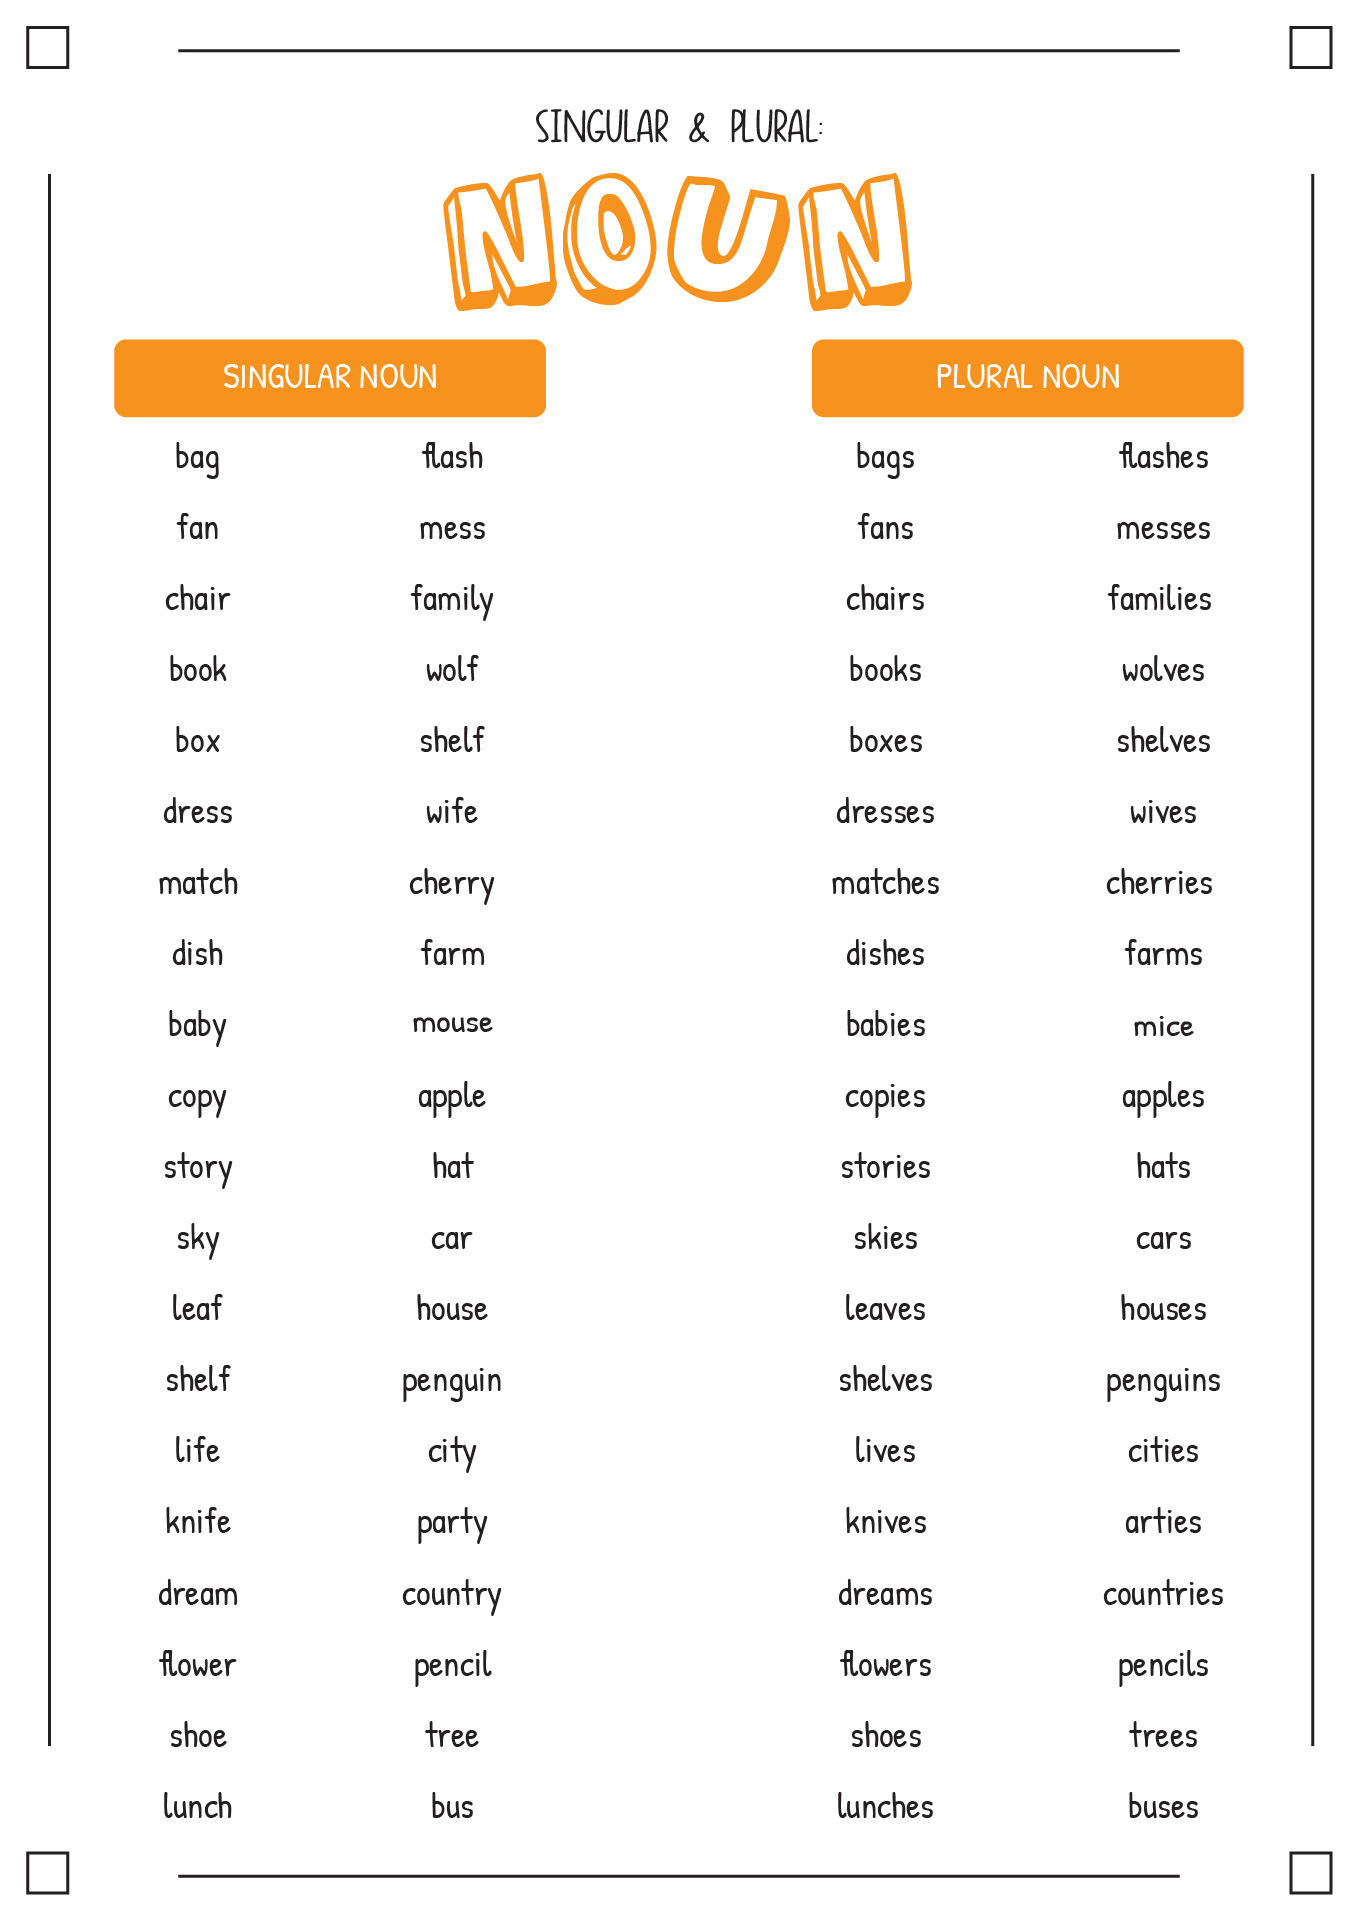 Singular and Plural Noun Chart Image